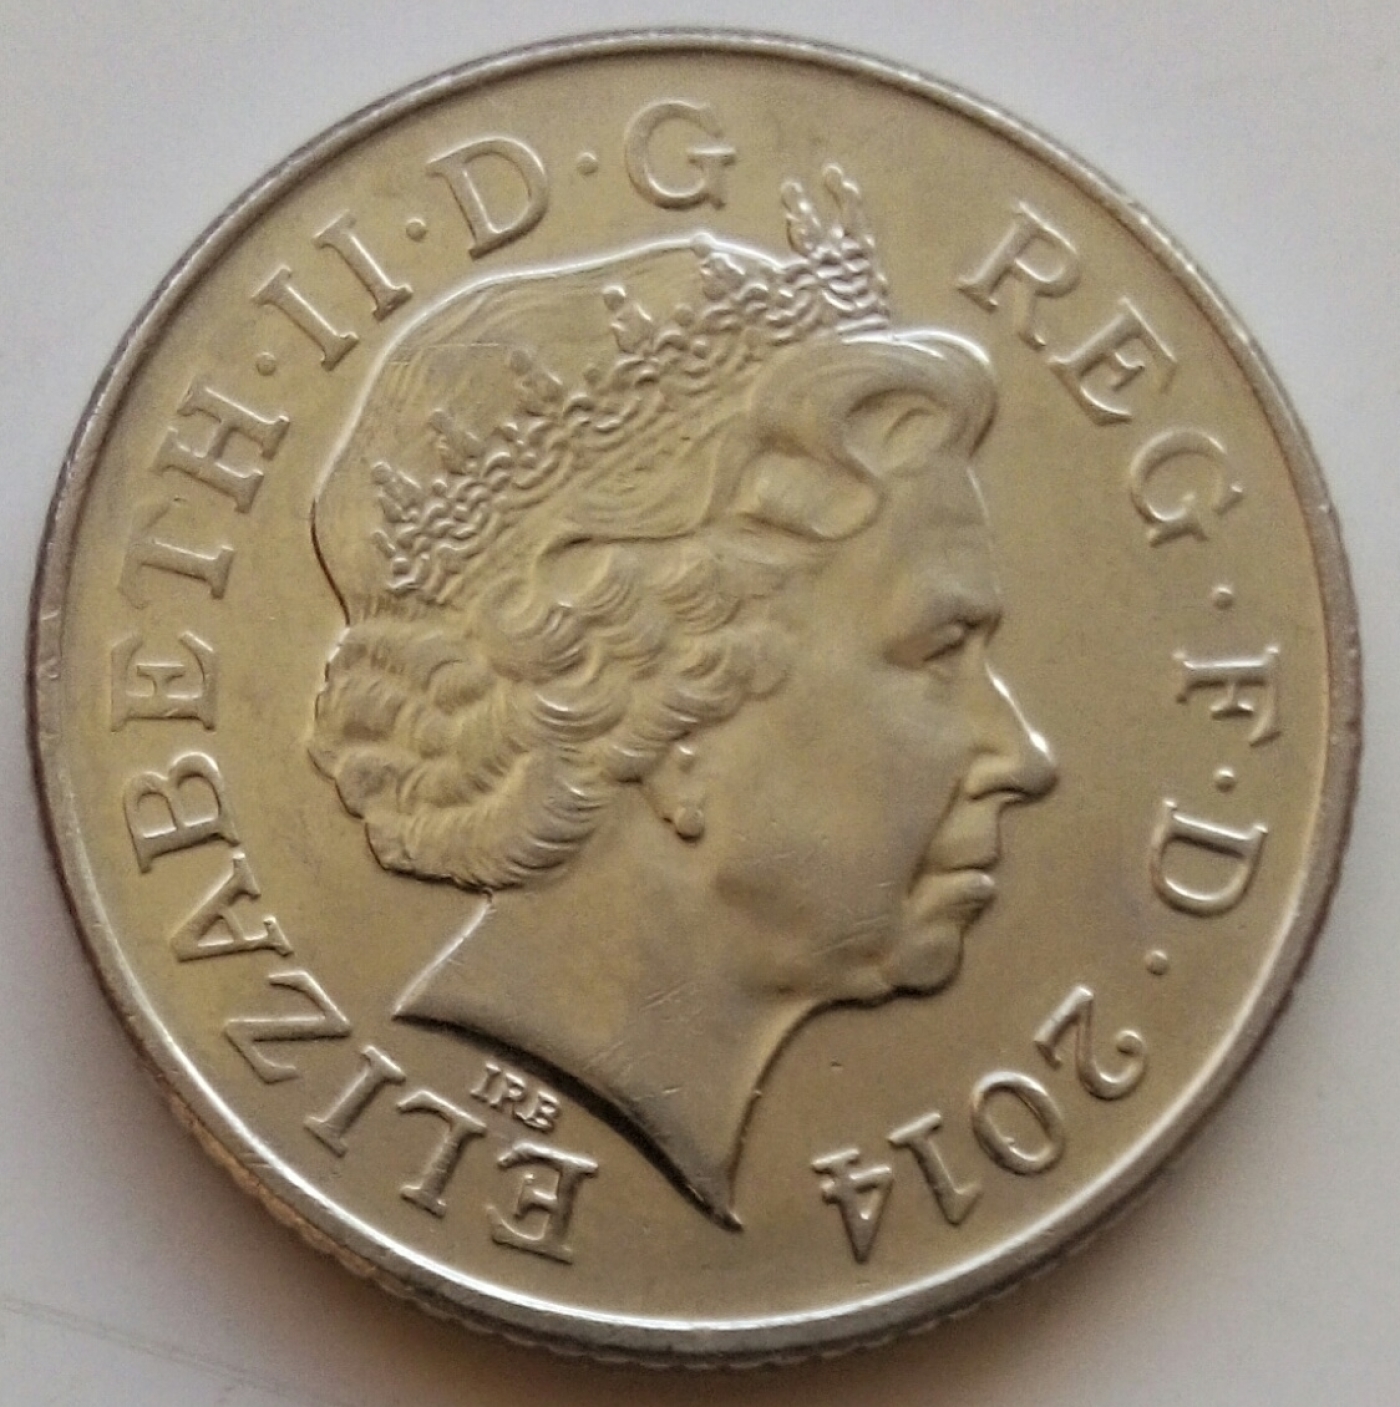 10 Pence 2014, Elizabeth II (1952-present) - Great Britain ...